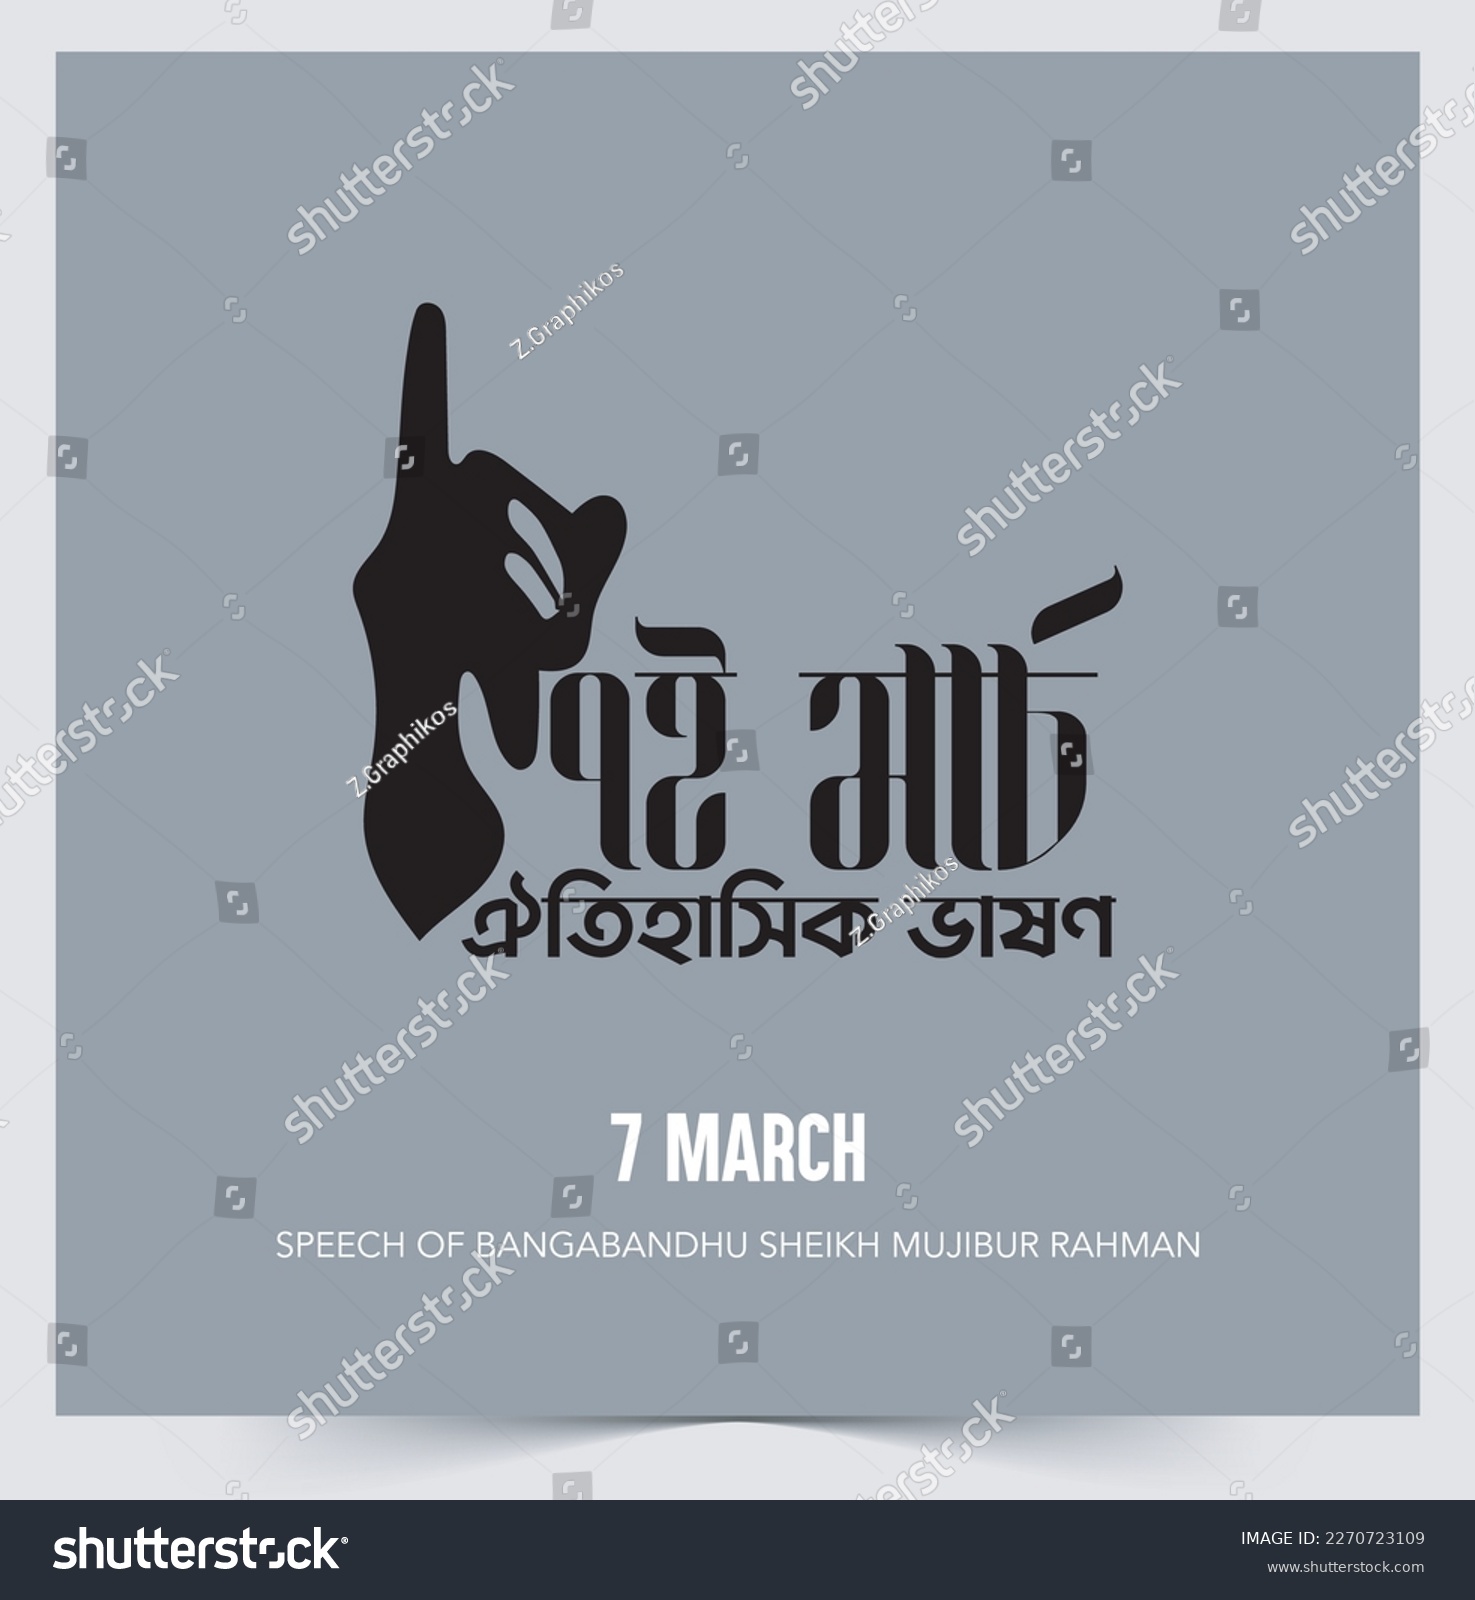 SVG of 7 March Speech of Bangabandhu Sheikh Mujibur Rahman Bangla vector typography and Calligraphy design for Bangladesh. Index finger raised speech svg